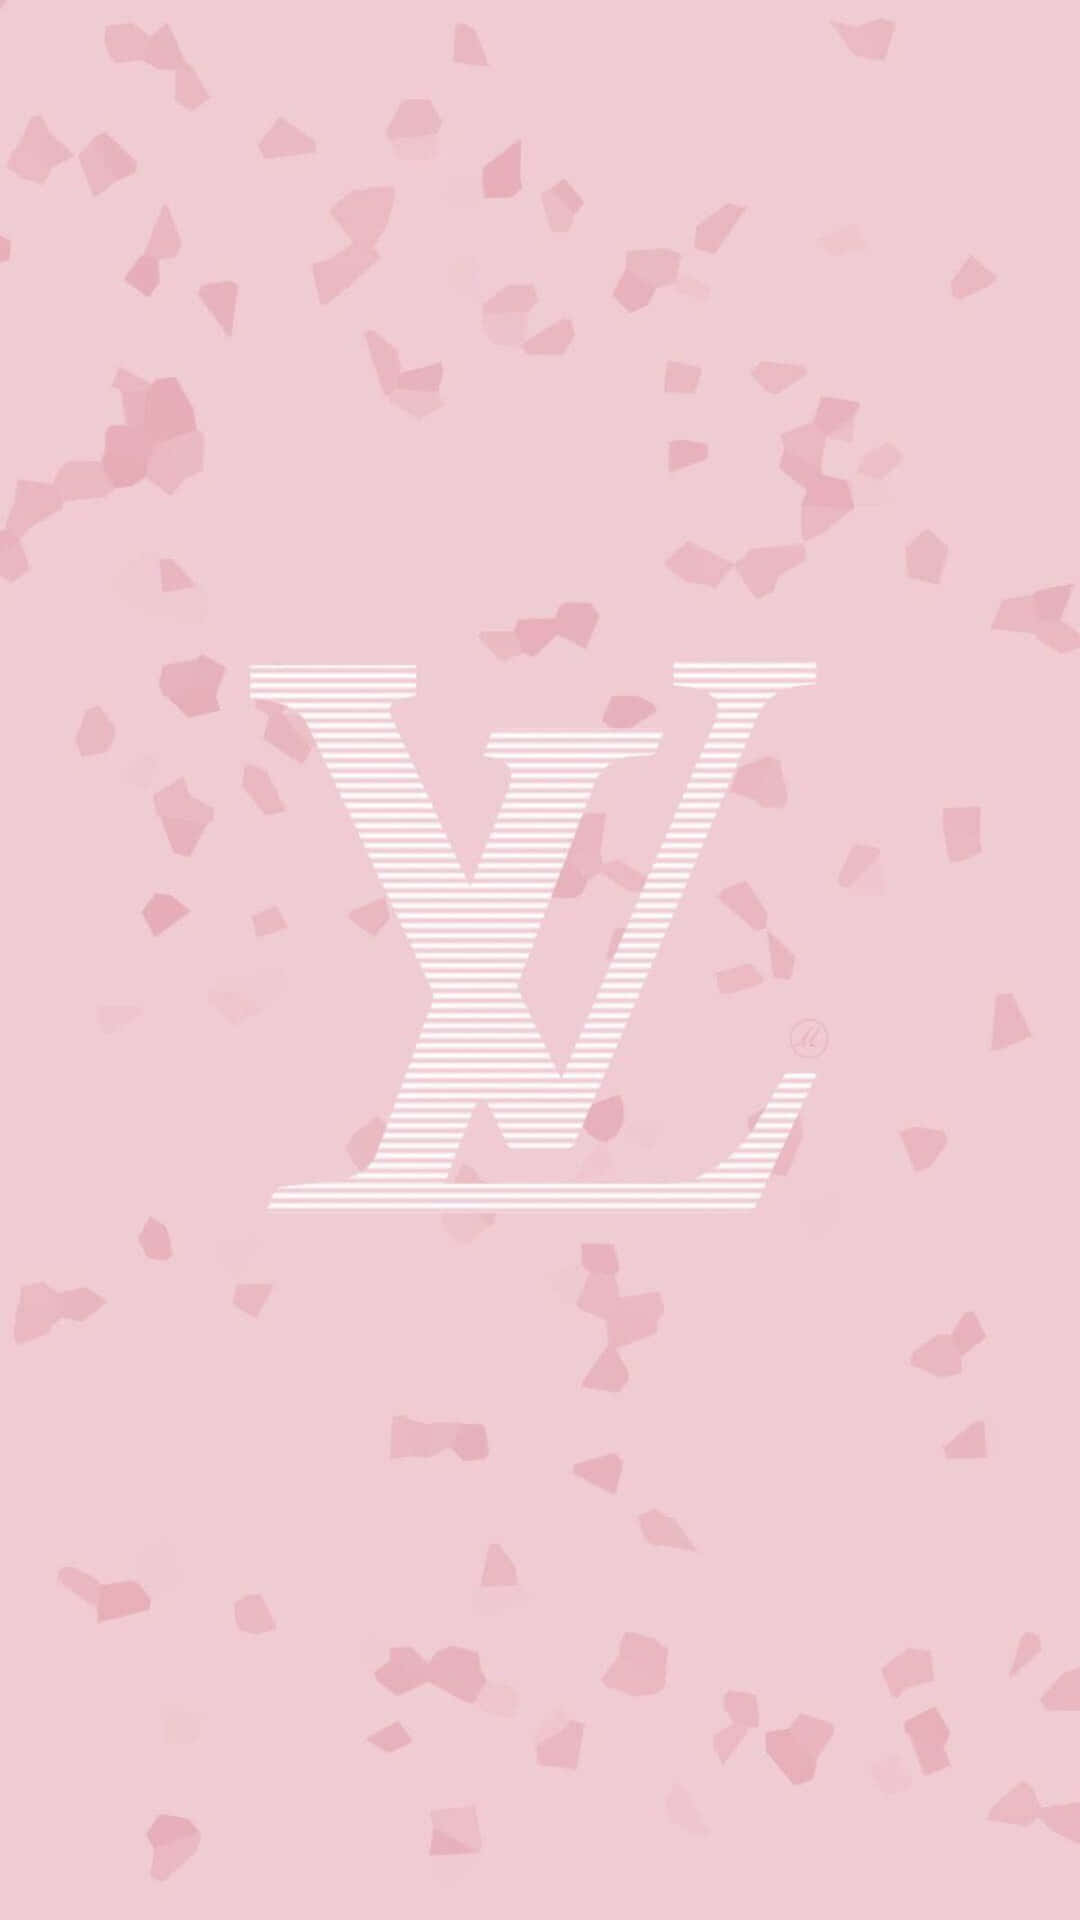 Louis Vuitton tapet - tapet til din telefon eller computer Wallpaper